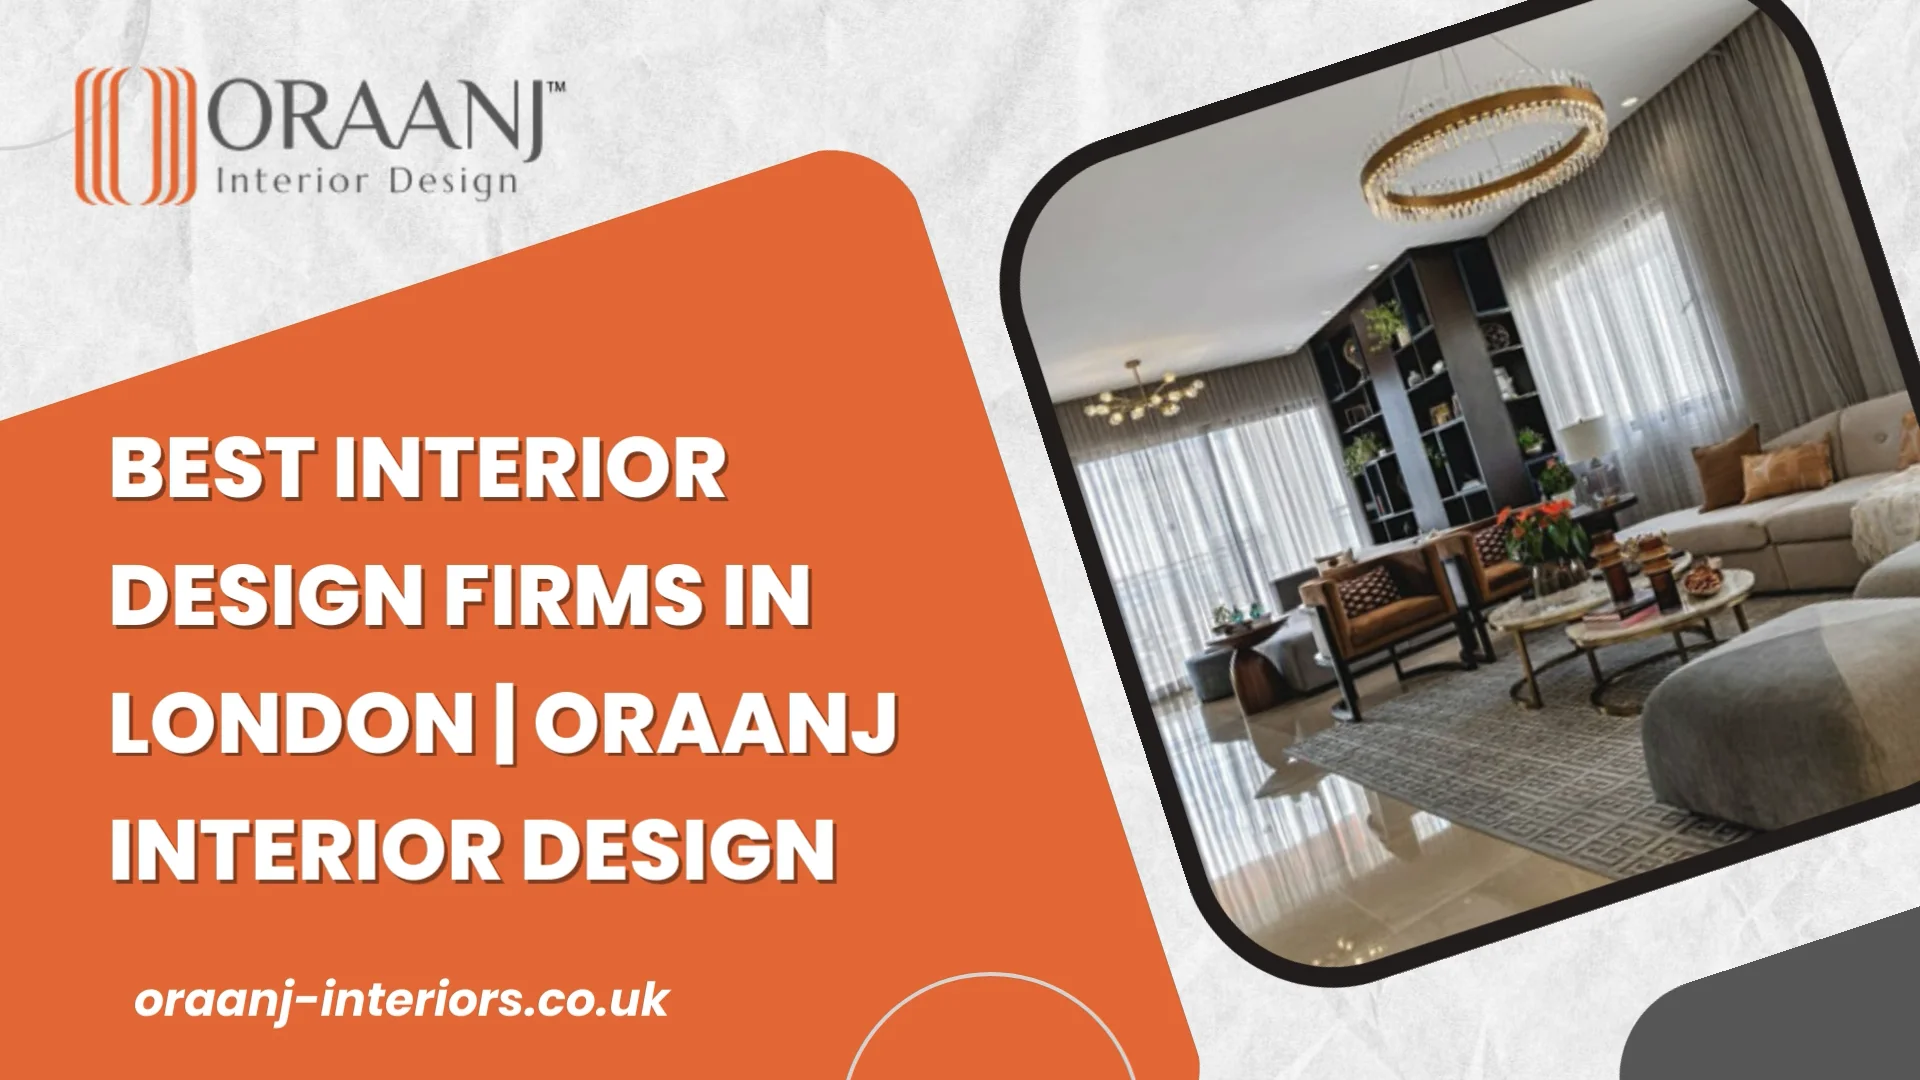 Best Interior Design Firms IN London  Oraanj Interior Design on Vimeo